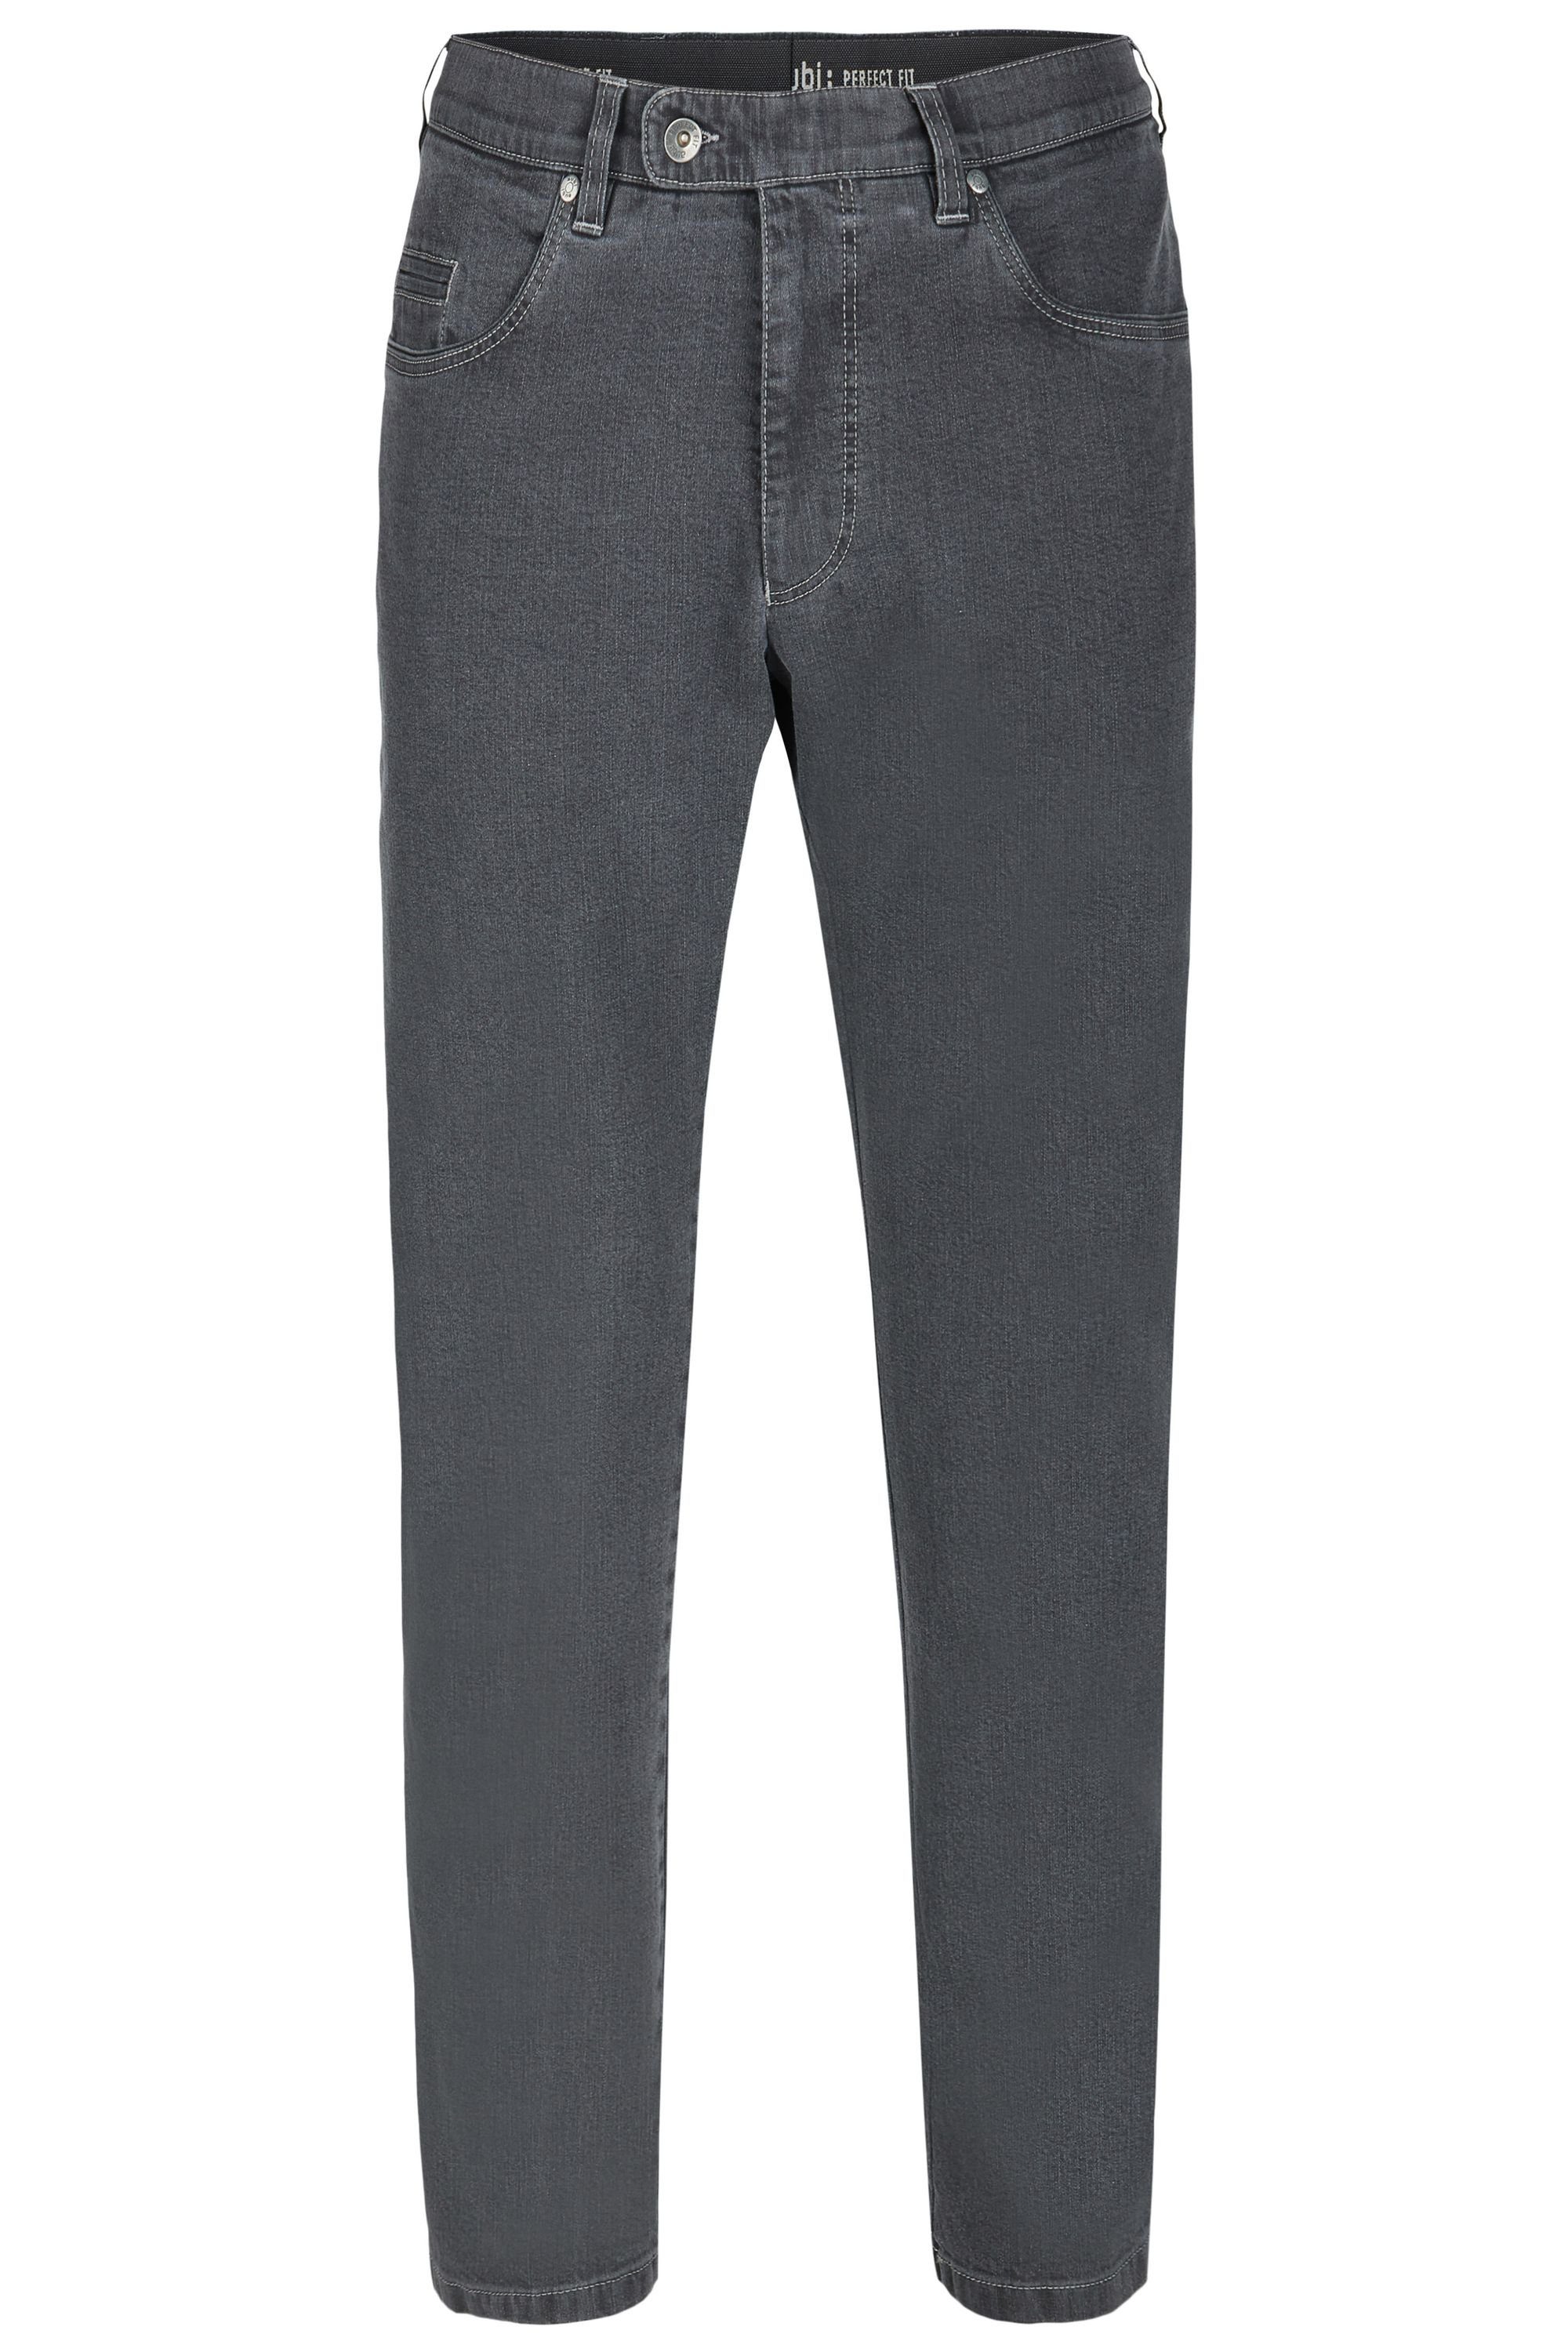 aubi: Bequeme Jeans aubi Perfect Fit Herren Jeans Hose Stretch Modell 577 grey (53)